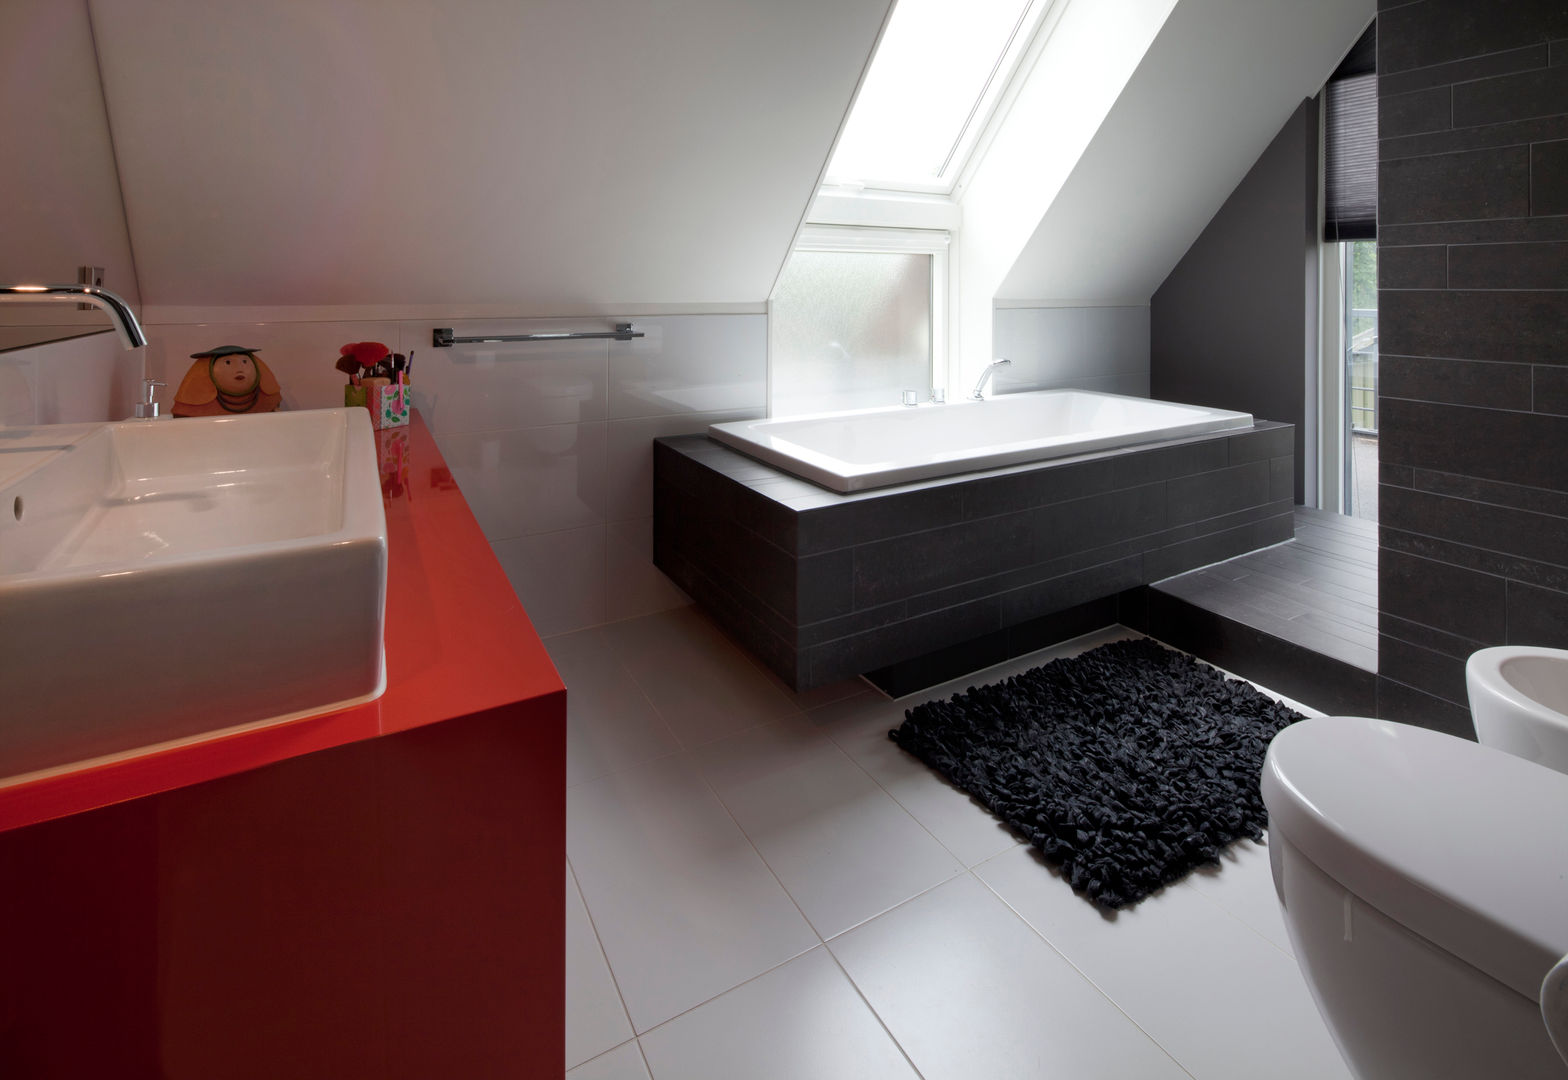 Omgeving & functionaliteit verbonden in een verbazingwekkende villa in Vinkeveen, MEF Architect MEF Architect Modern bathroom